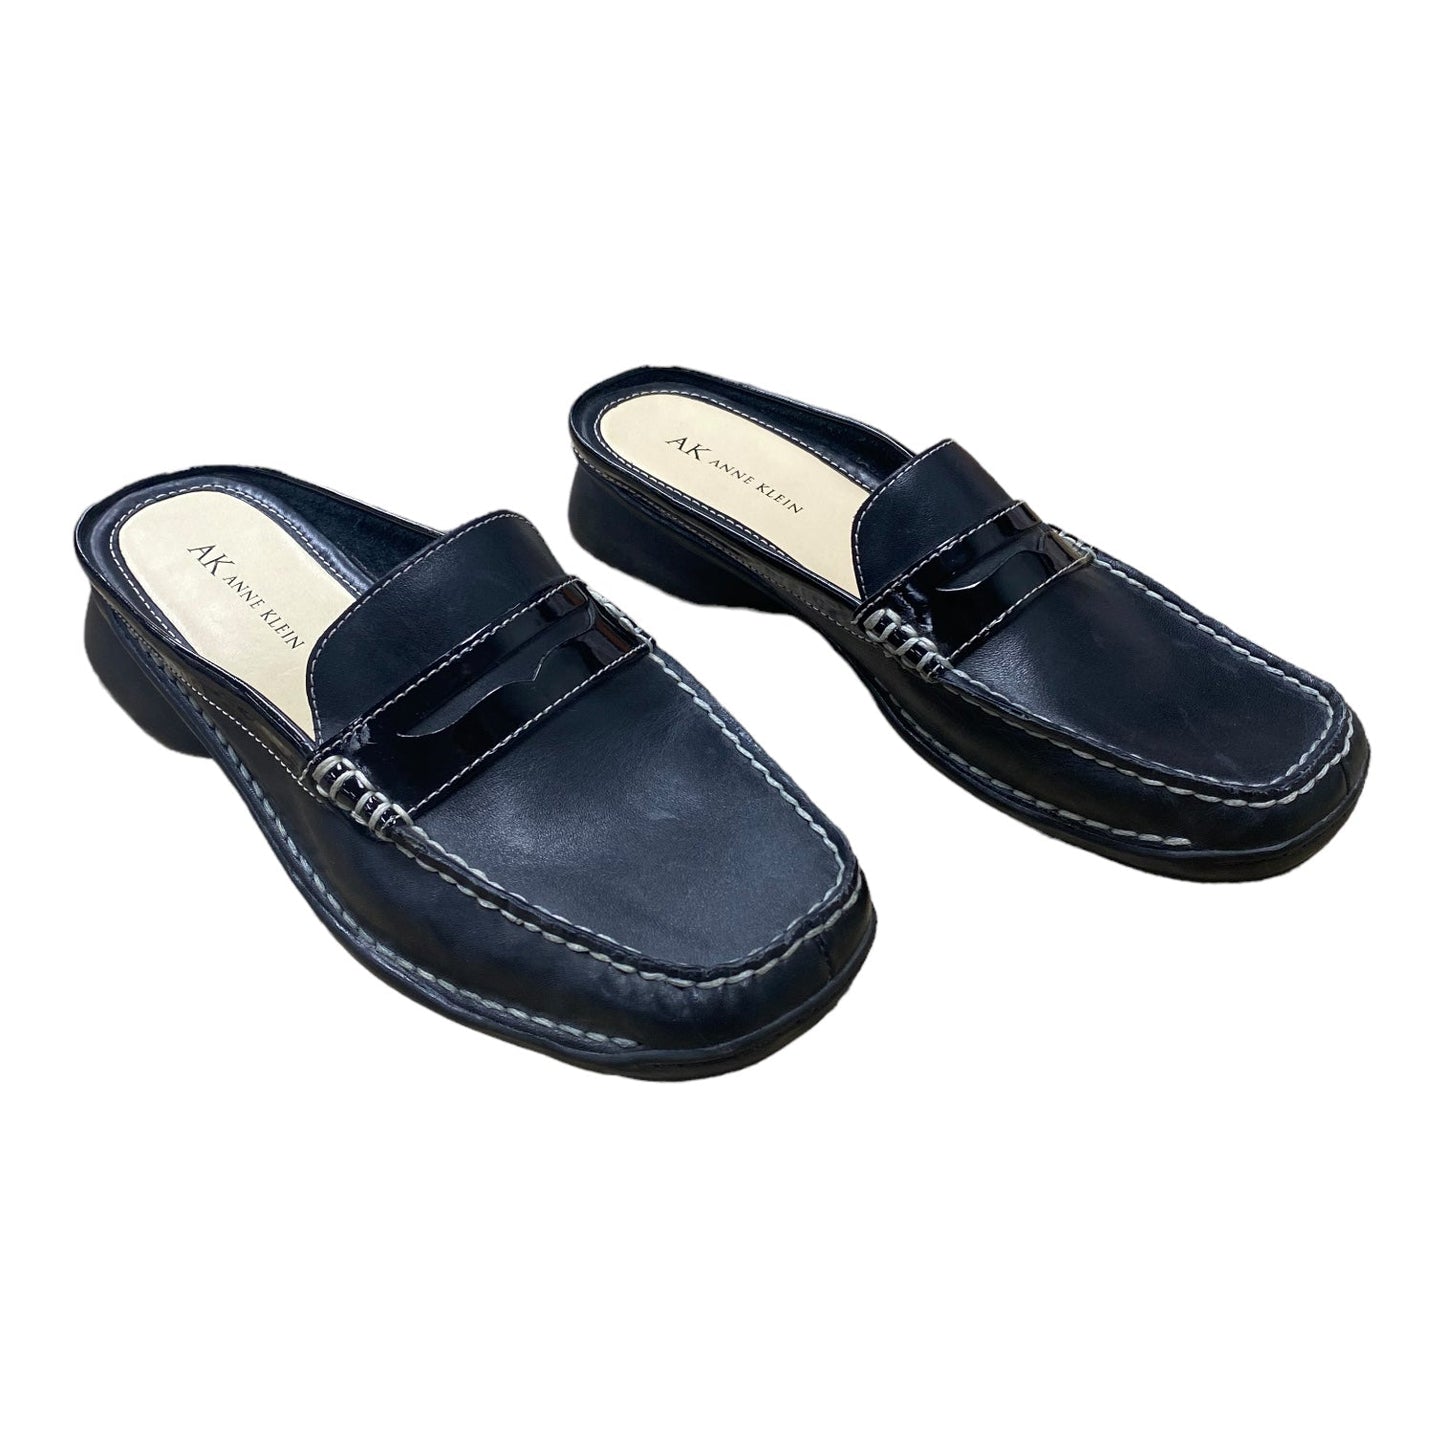 Black Shoes Flats Anne Klein, Size 8.5